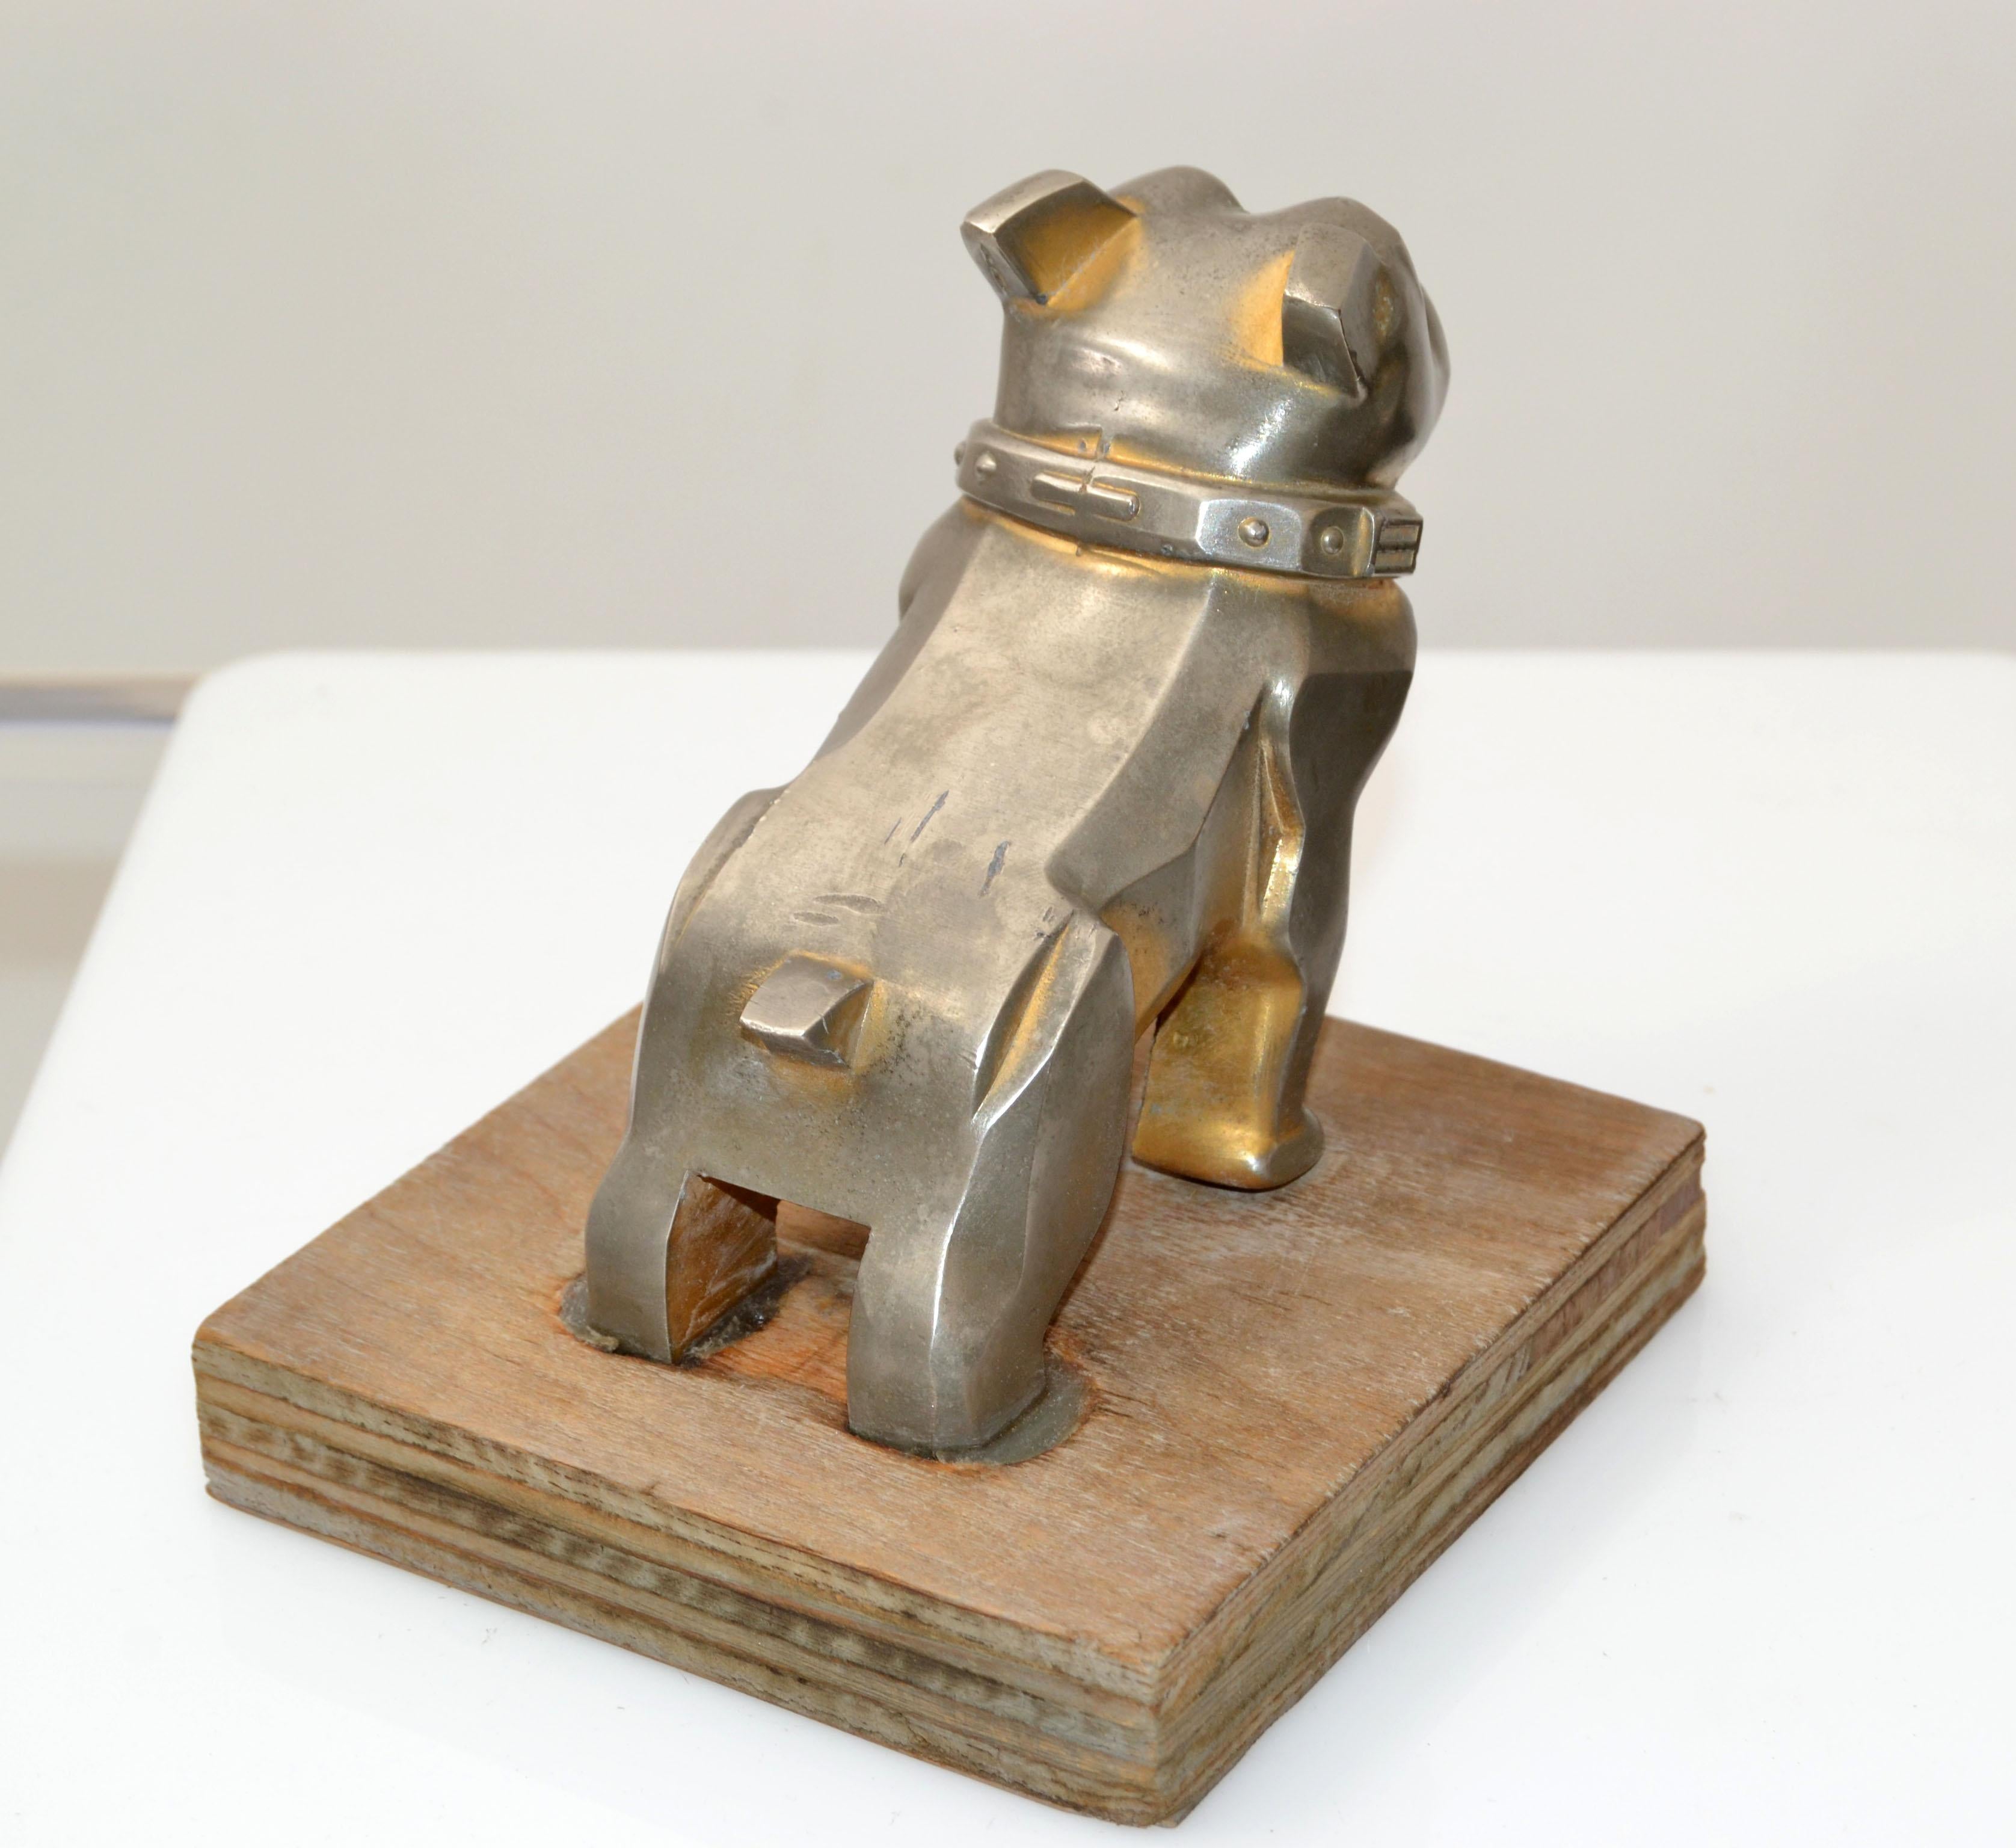 Silvered Vintage Design Patent Mack Trucks Bull Dog Figurine, Statue, Animal Sculpture For Sale